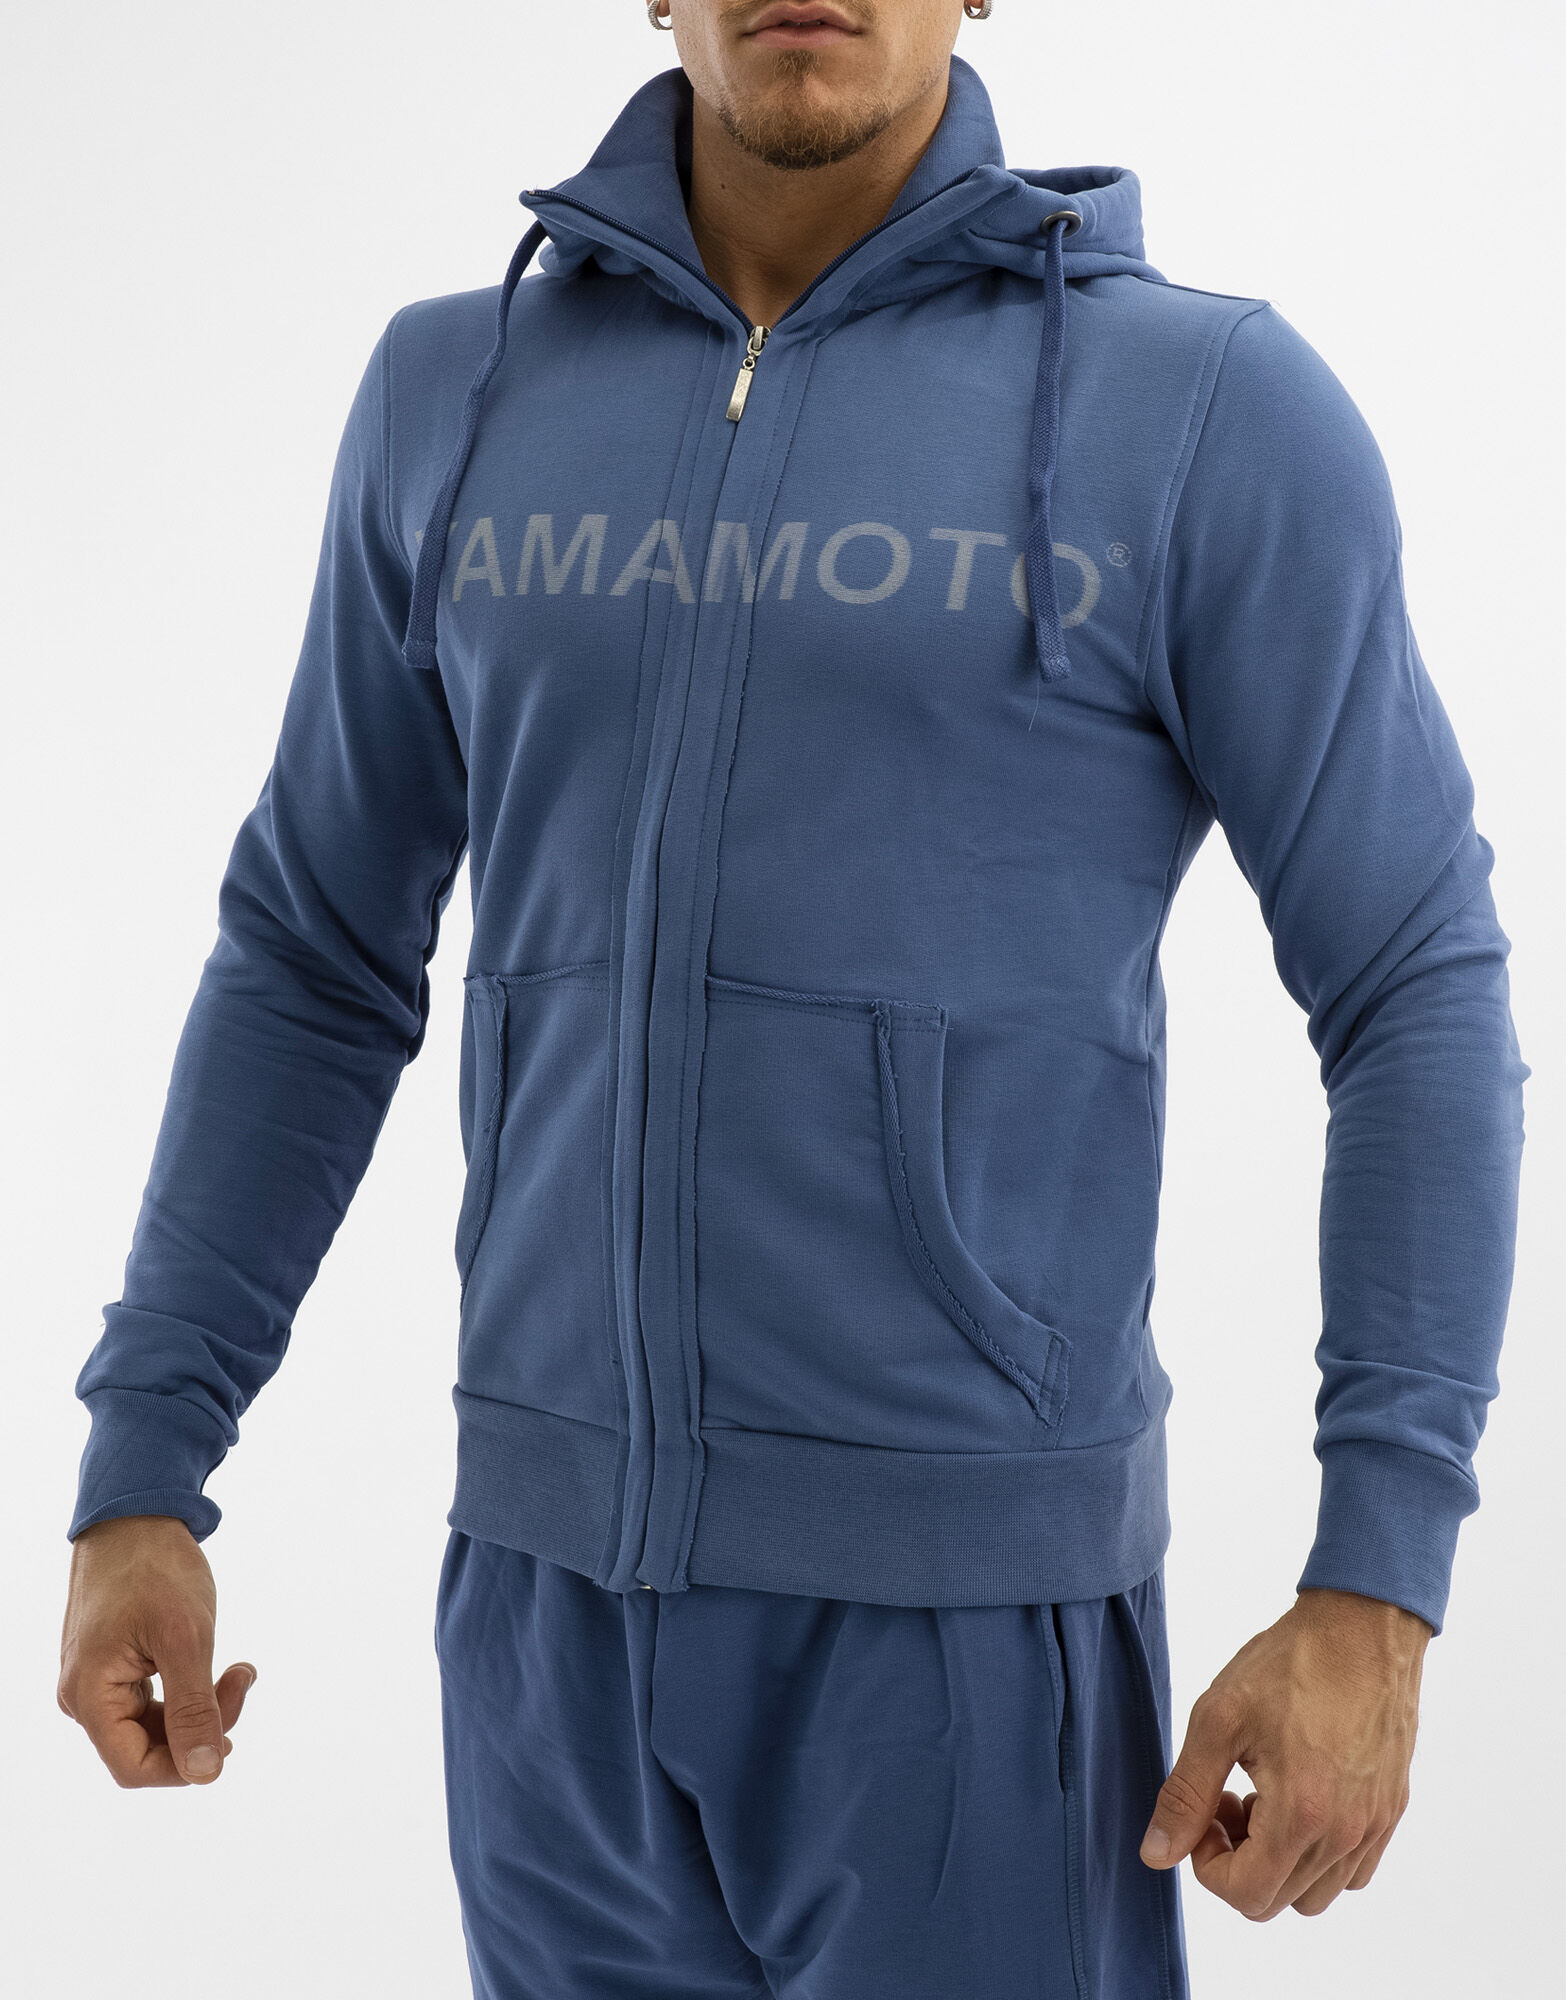 YAMAMOTO OUTFIT Sweatshirt Zip Colore: Navy Xxl